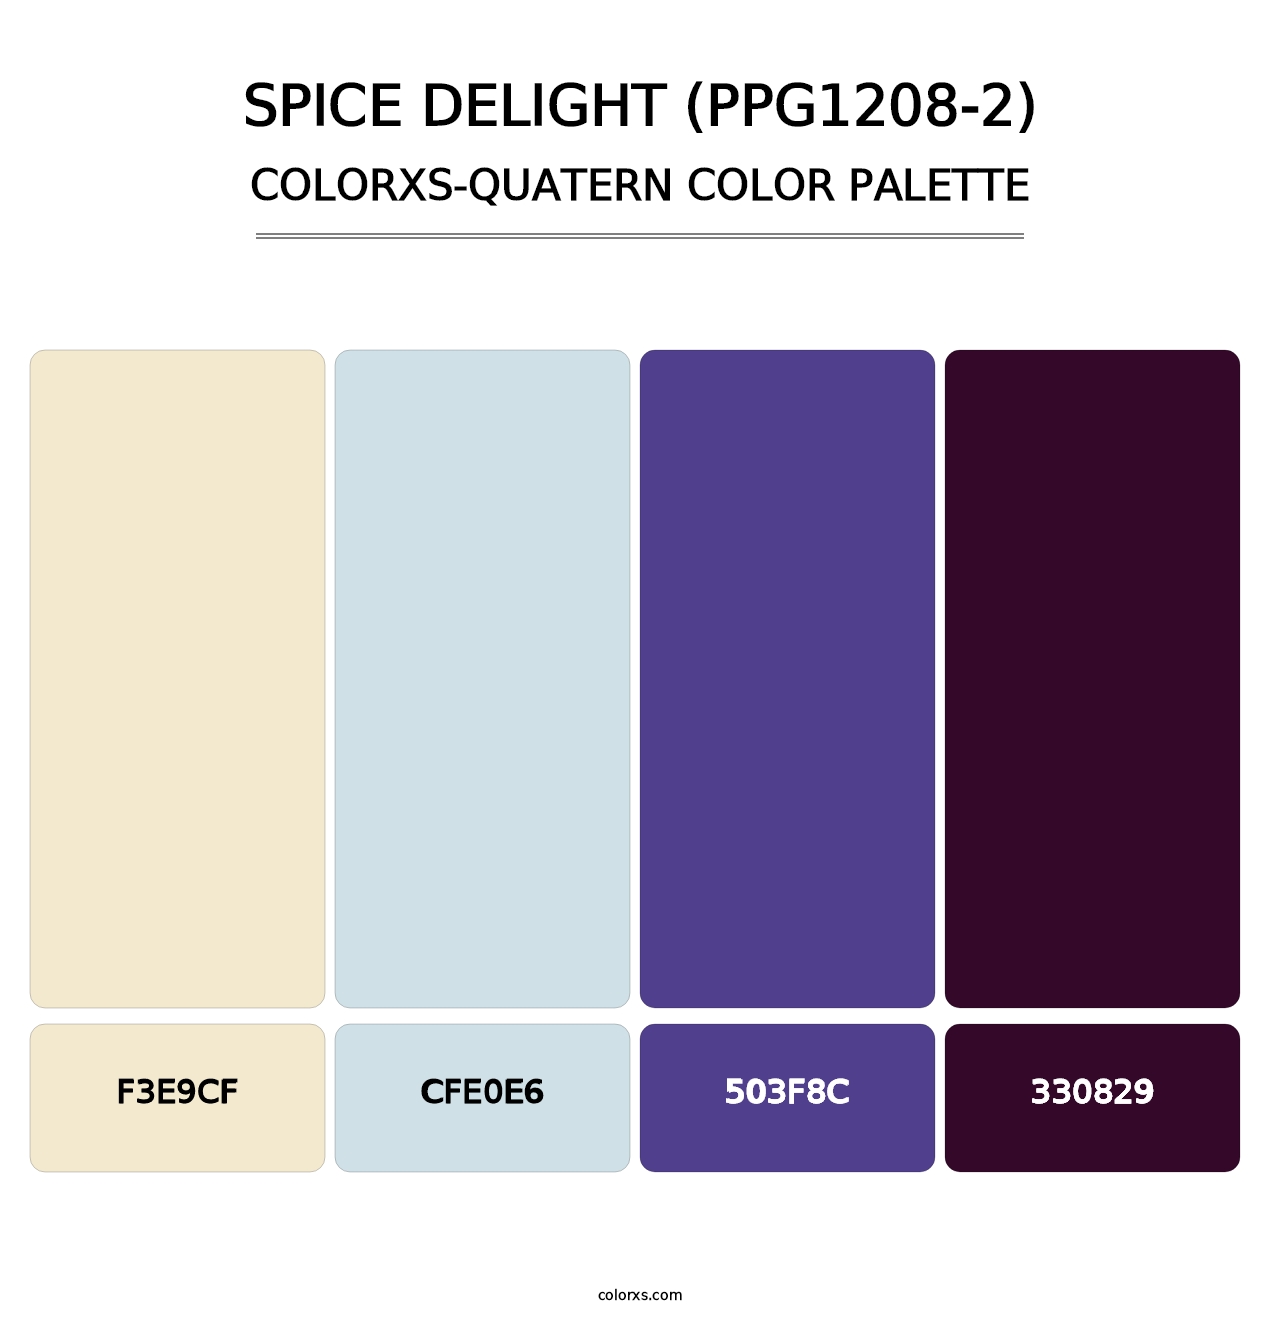 Spice Delight (PPG1208-2) - Colorxs Quatern Palette